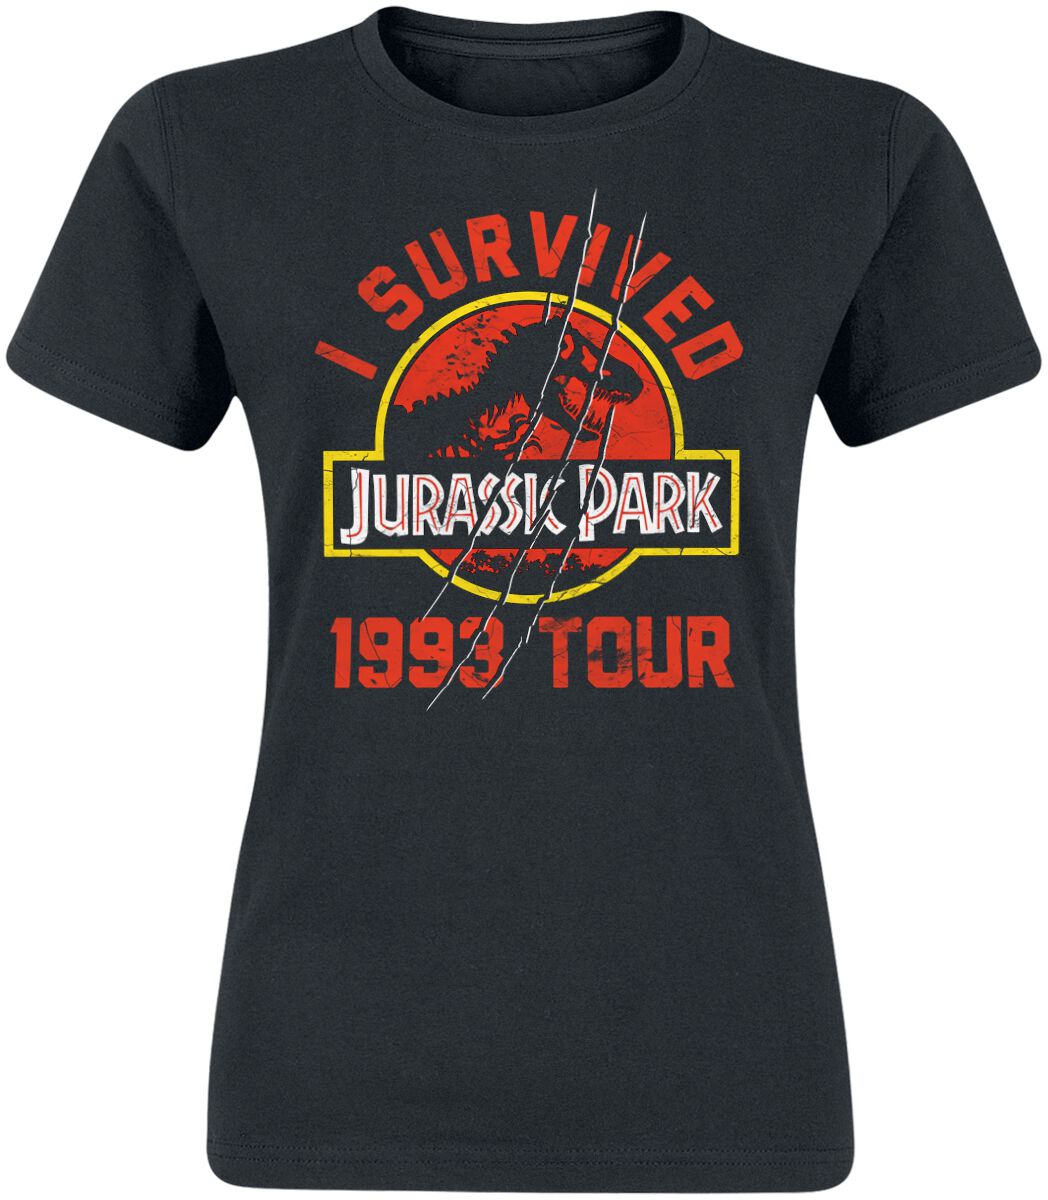 Jurassic Park 1993 - Tour T-Shirt schwarz in XL